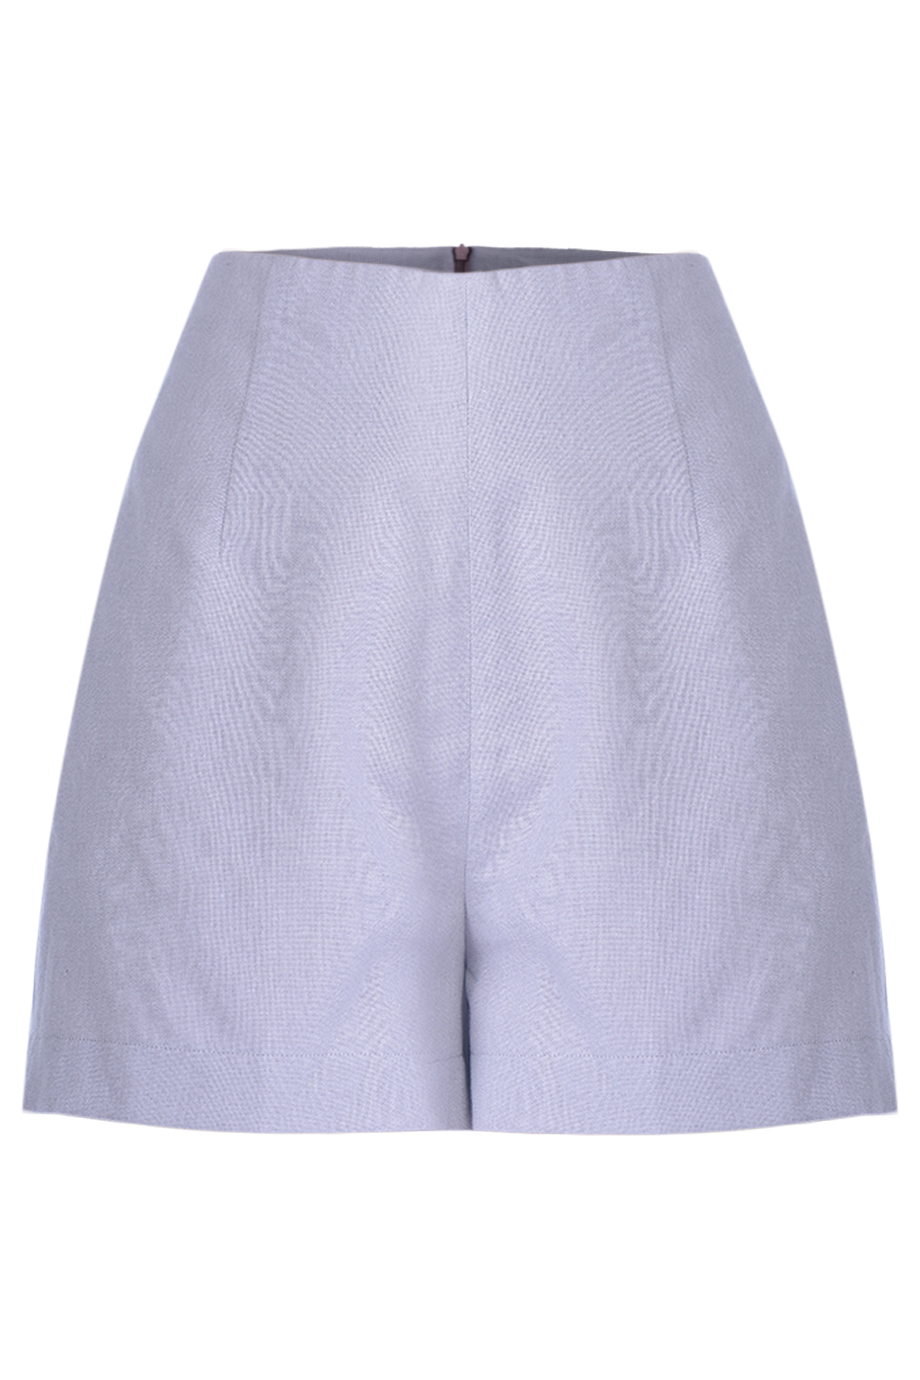 Quần short Noelani High-waisted Linen Shorts/ Lavender 2118